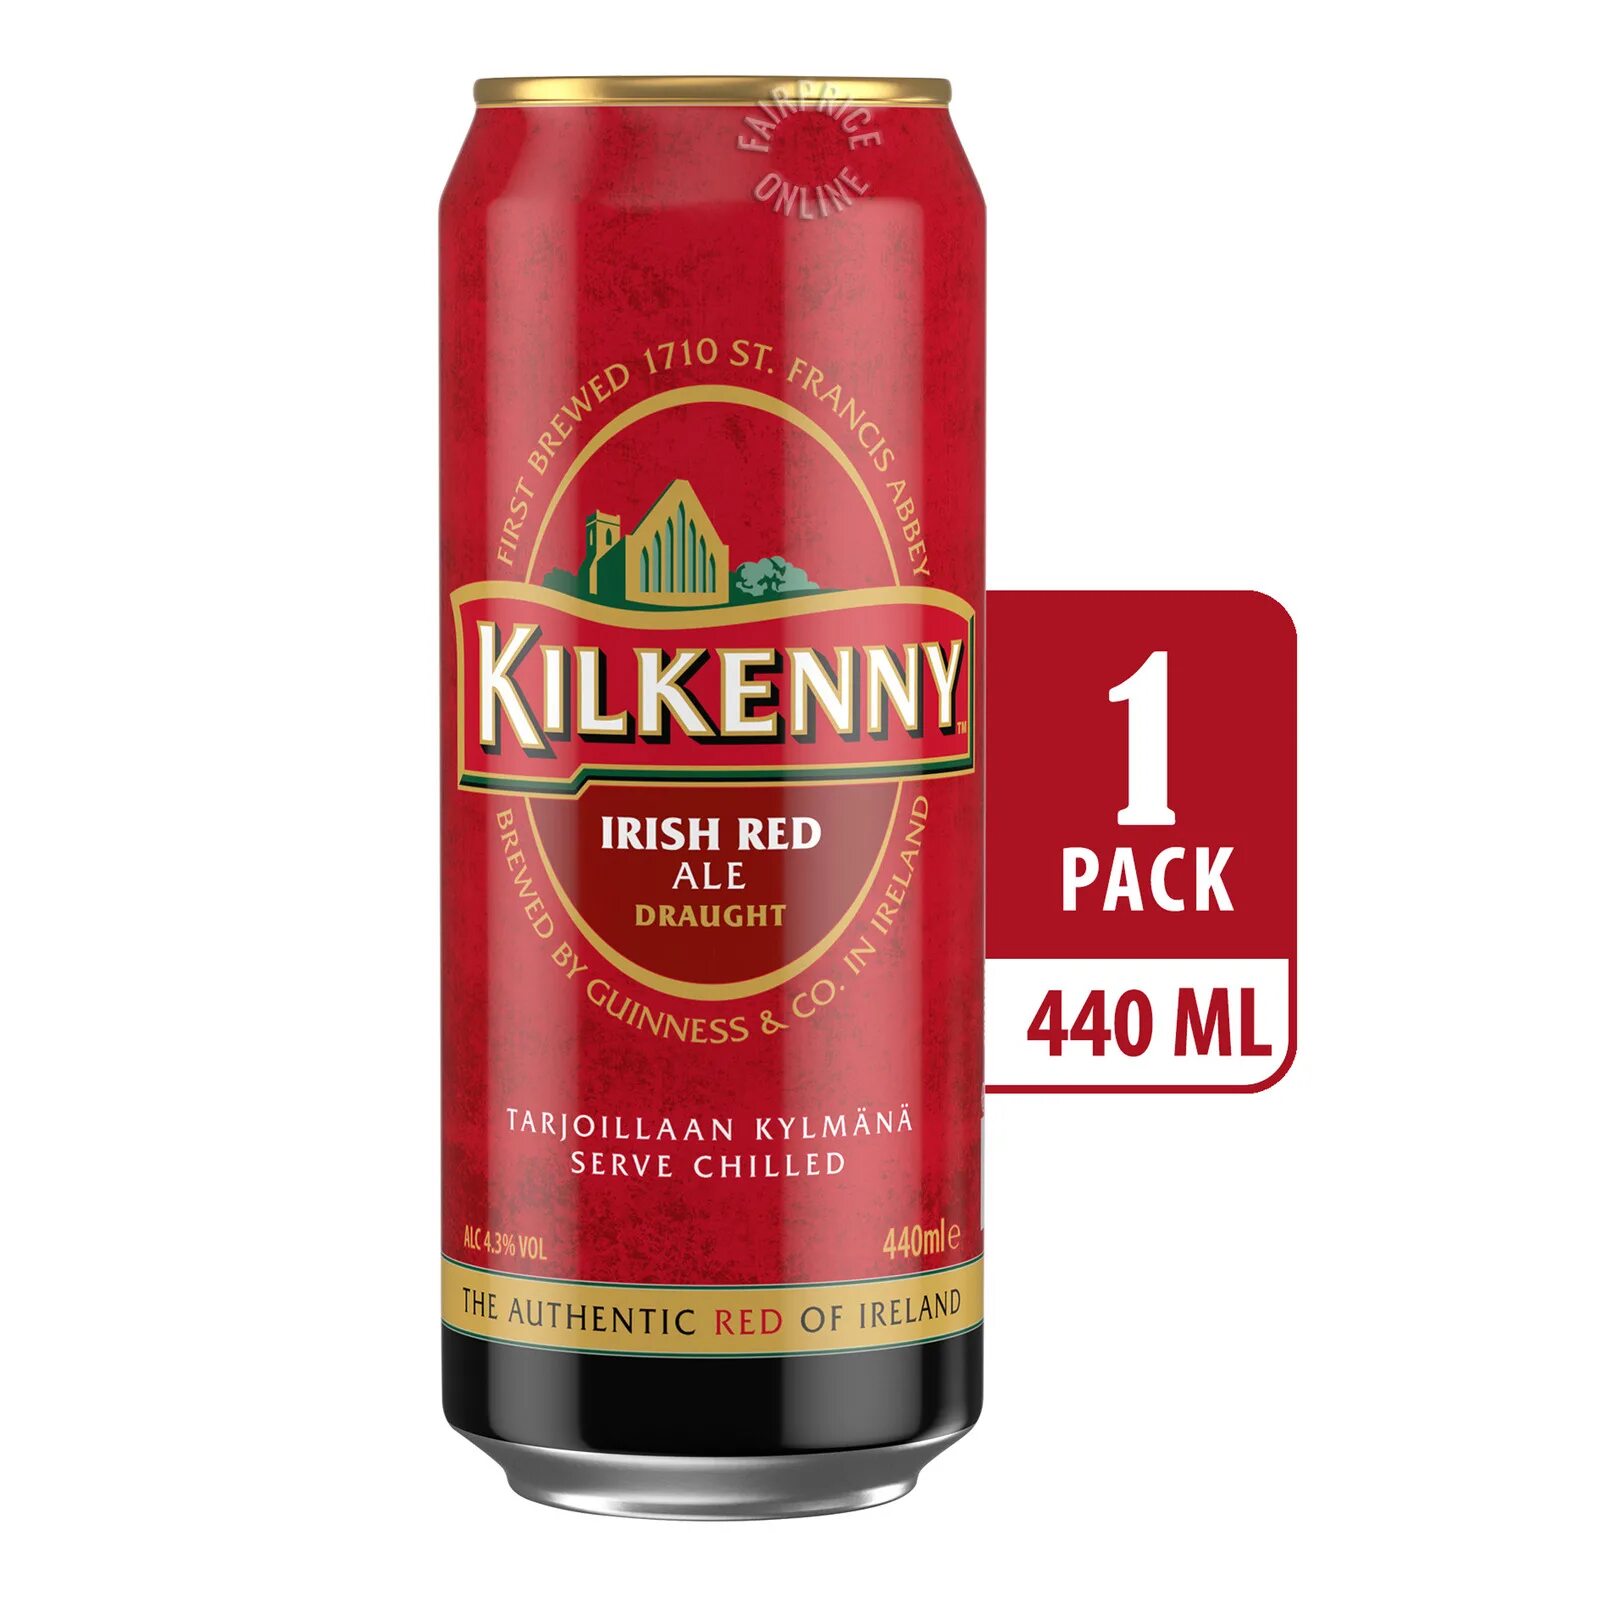 Kilkenny Irish Red. Kilkenny Draught пиво. Kilkenny Red ale. Irish Red ale пиво. Irish red